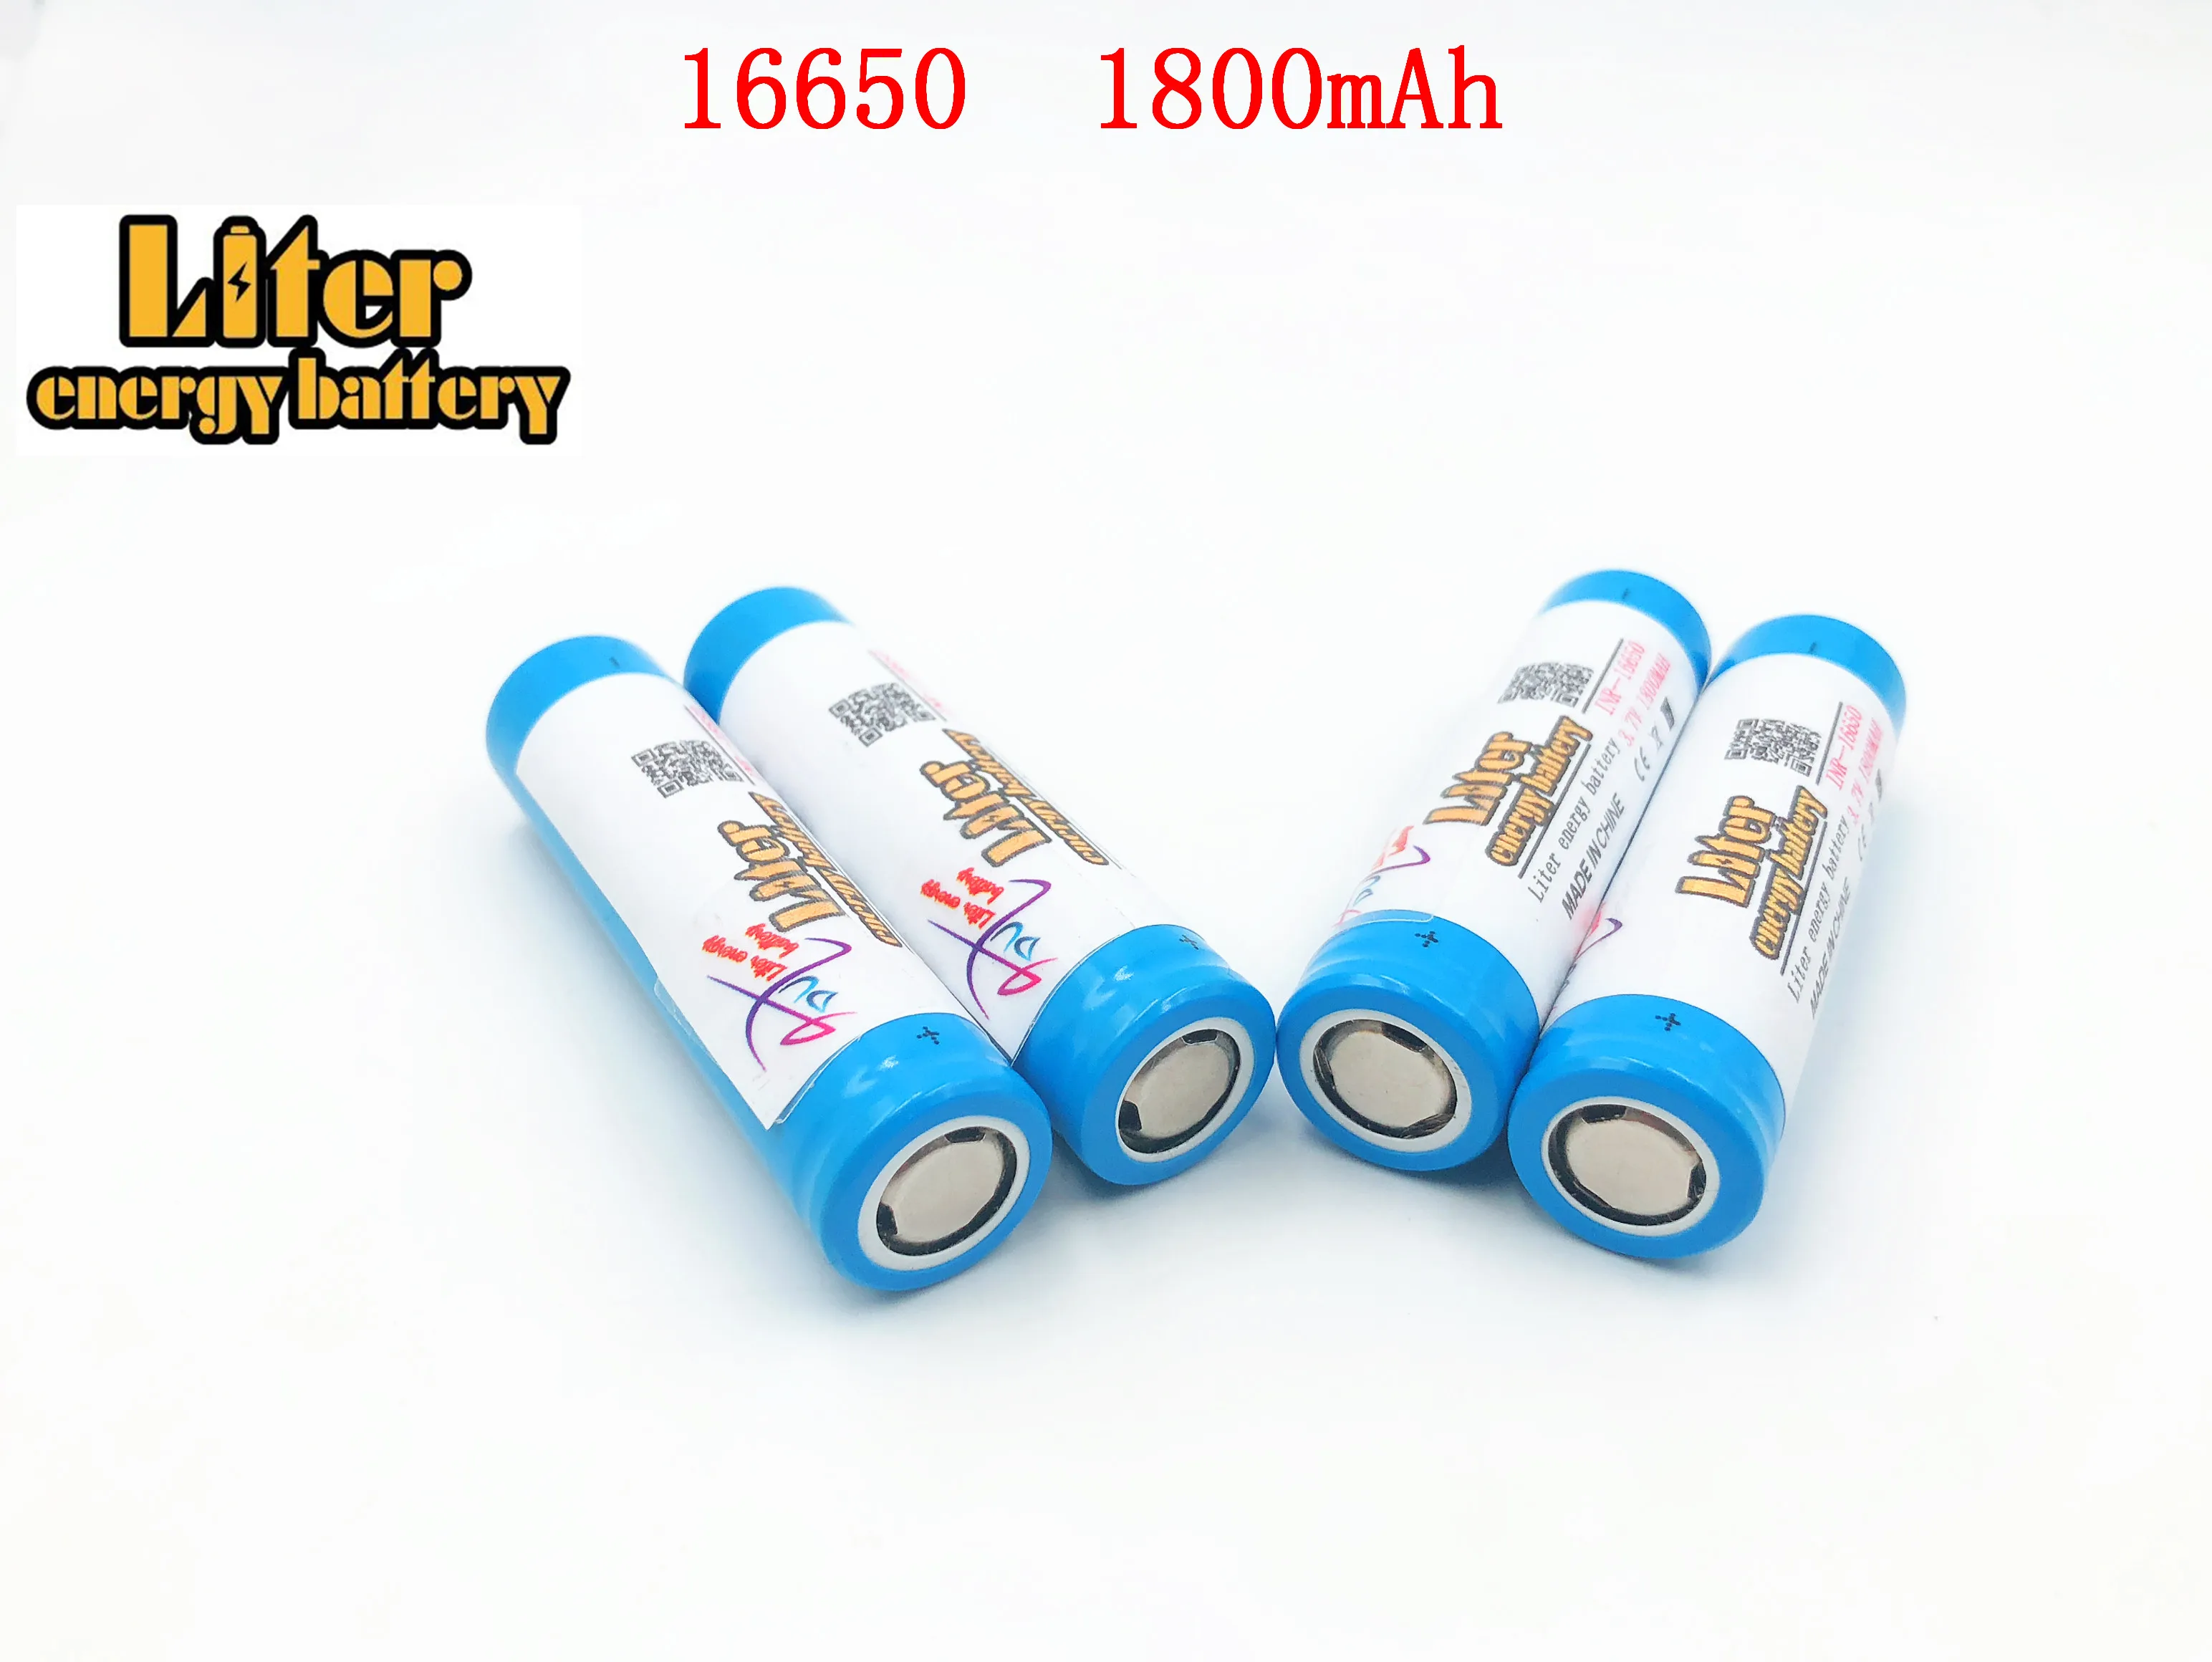 Liter energy battery 16650 1800mah 3.7V 9.25Wh Li-ion rechargeable battery  Original UR16650ZTA